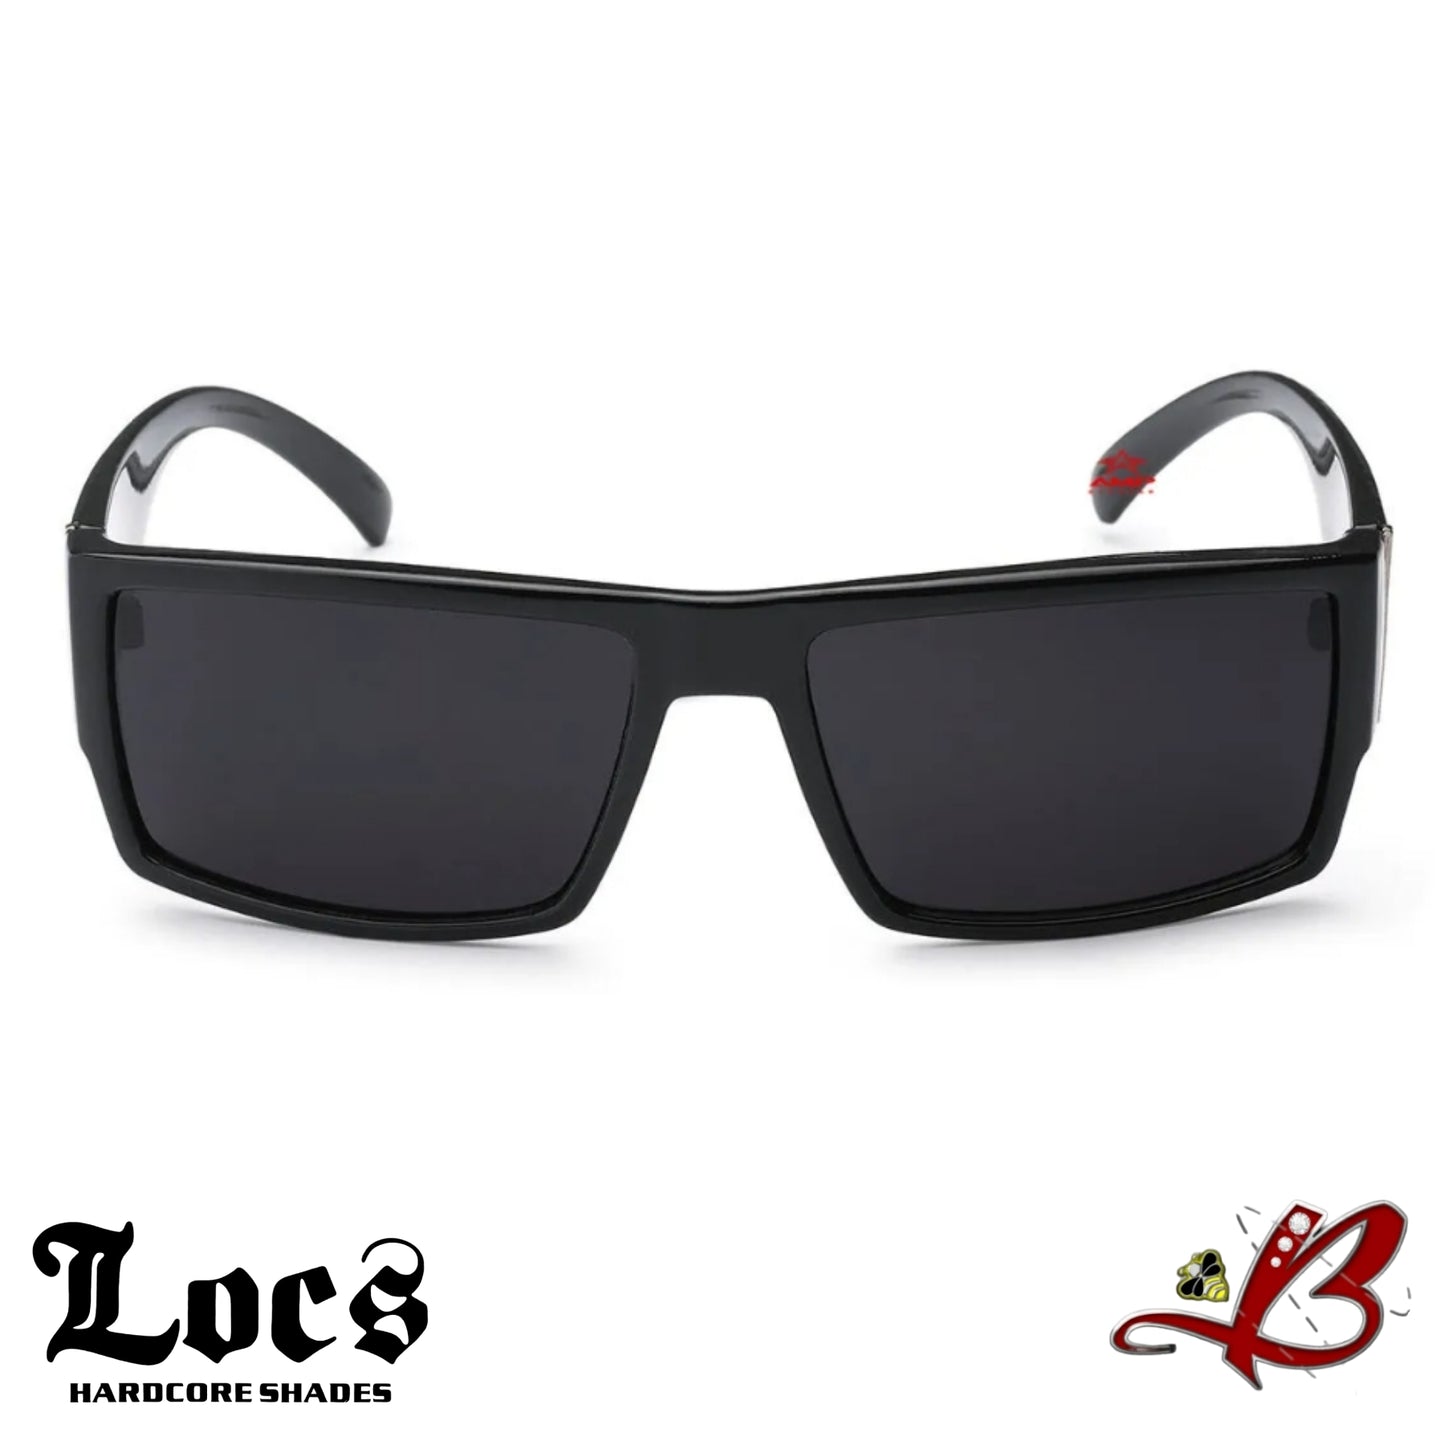 Locs OG Square Gangster Lowrider Sunglasses Street Smoke Black Frame Dark Lens Silver Accent Shades